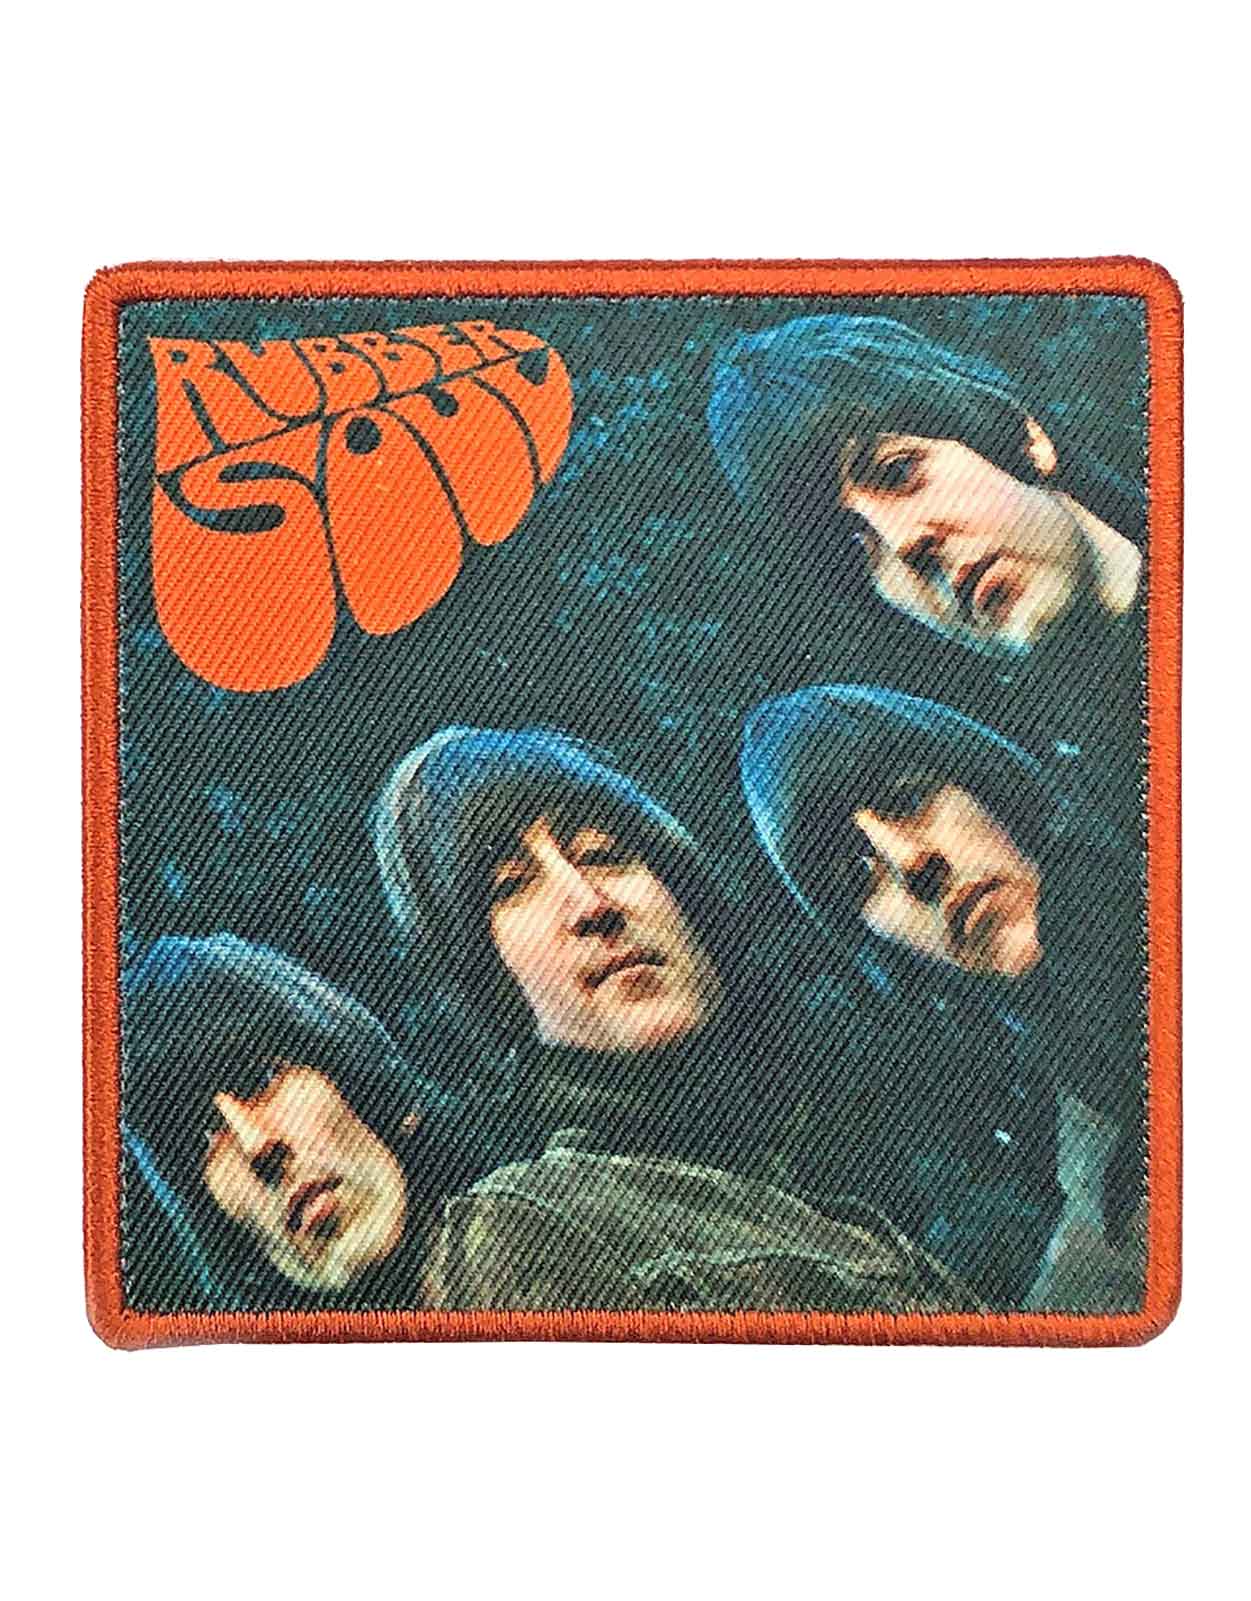 The Beatles Patch Rubber Soul Album Cover